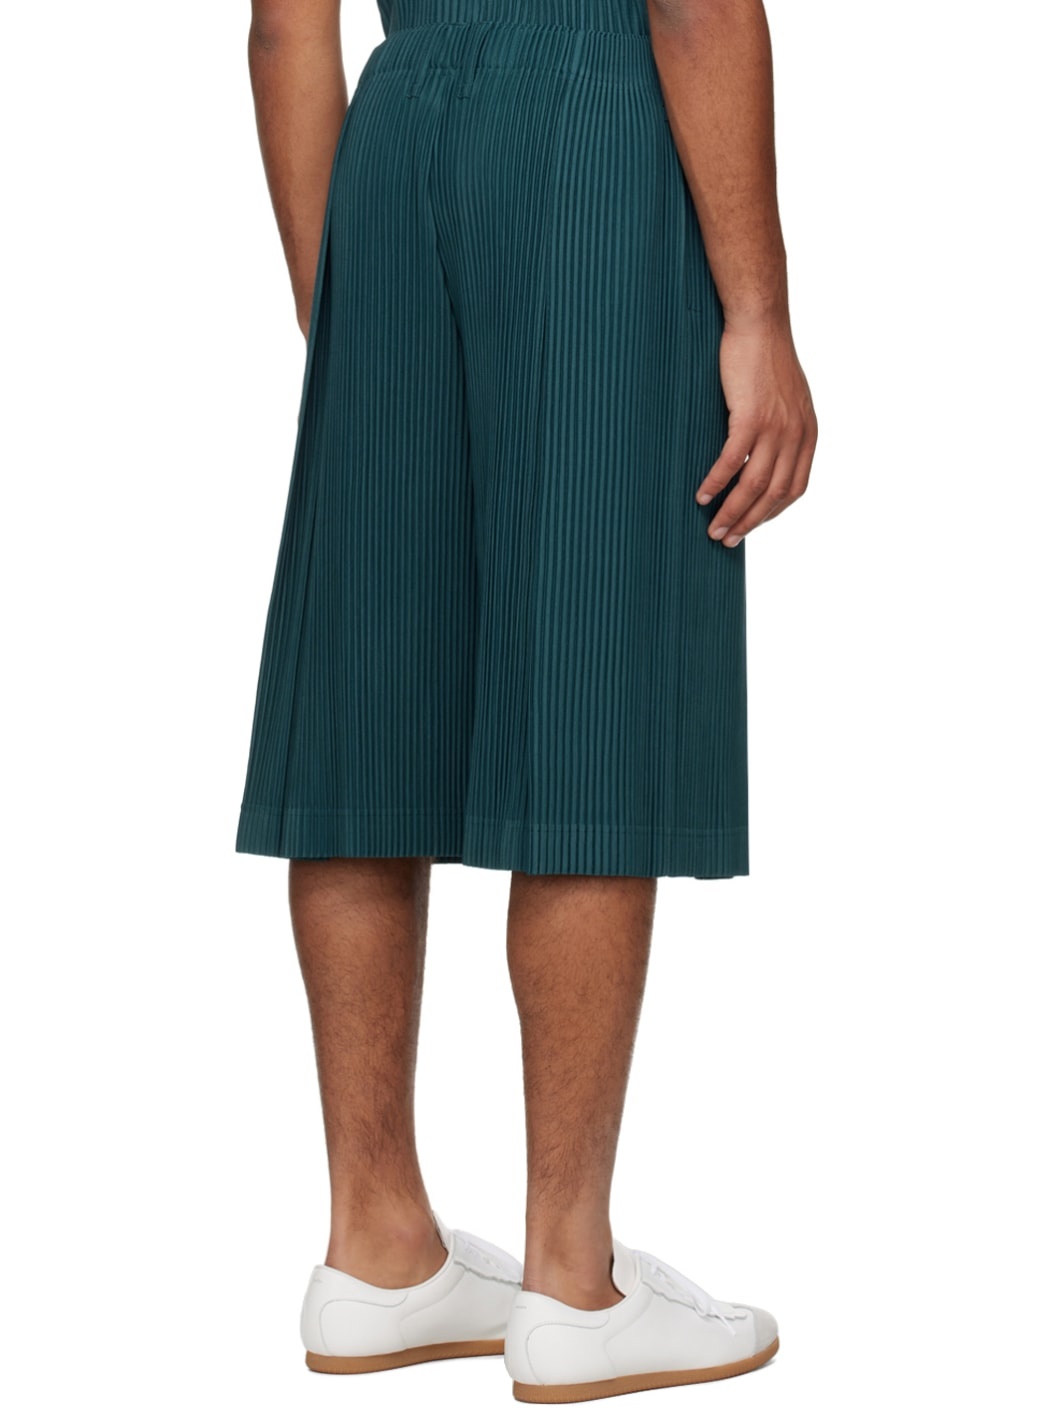 Green Tailored Pleats 2 Shorts - 3